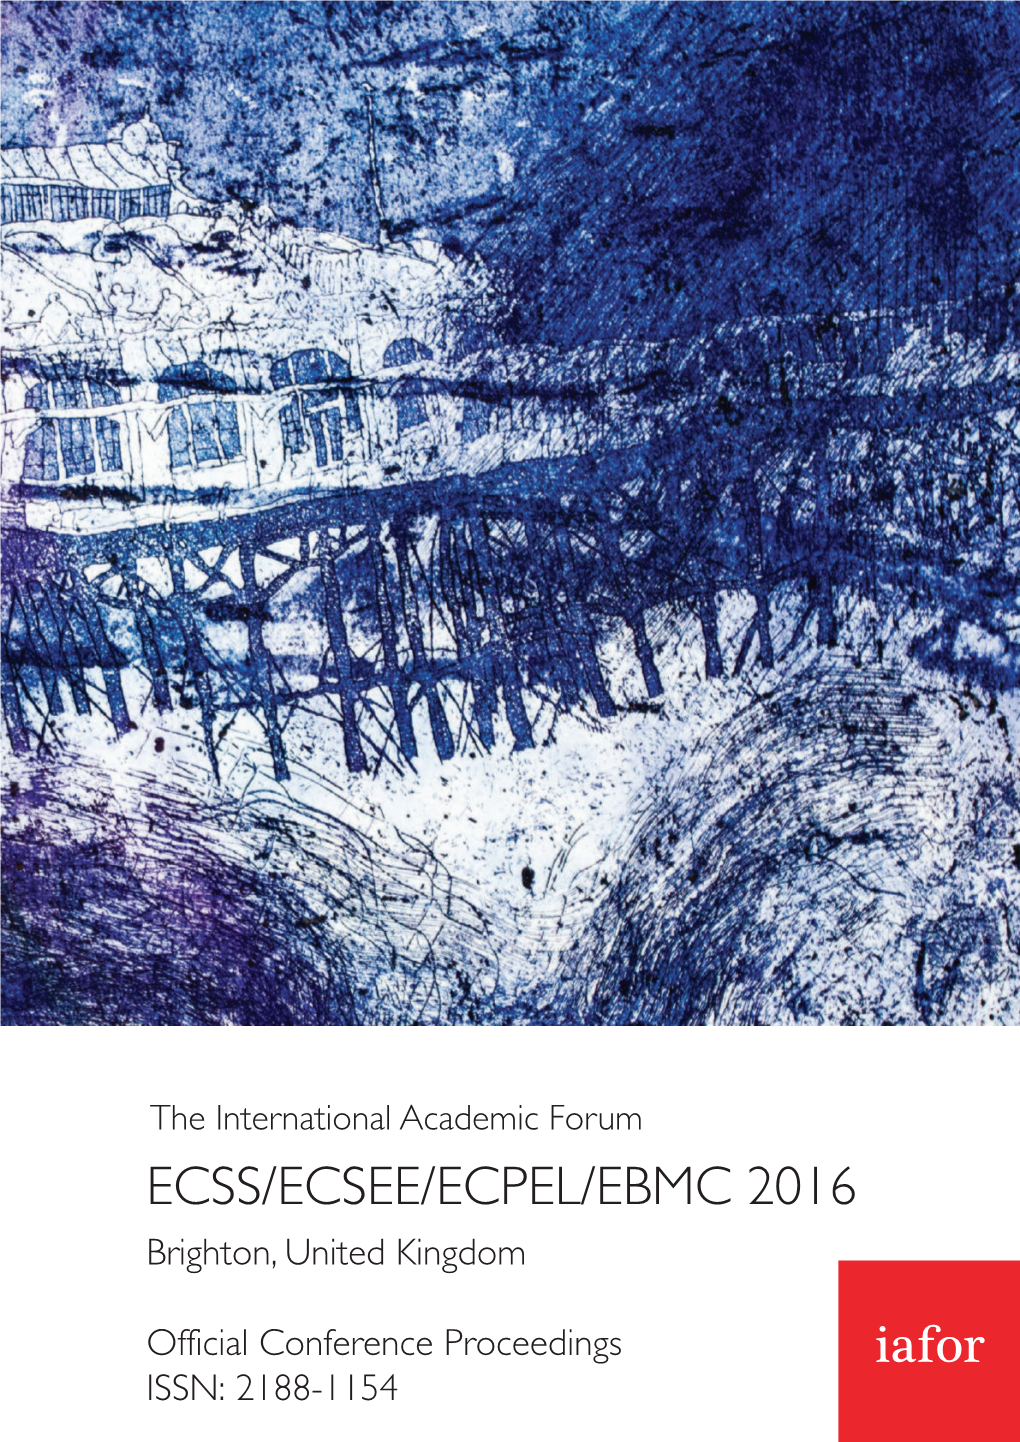 ECSS/ECSEE/ECPEL/EBMC 2016 Brighton, United Kingdom